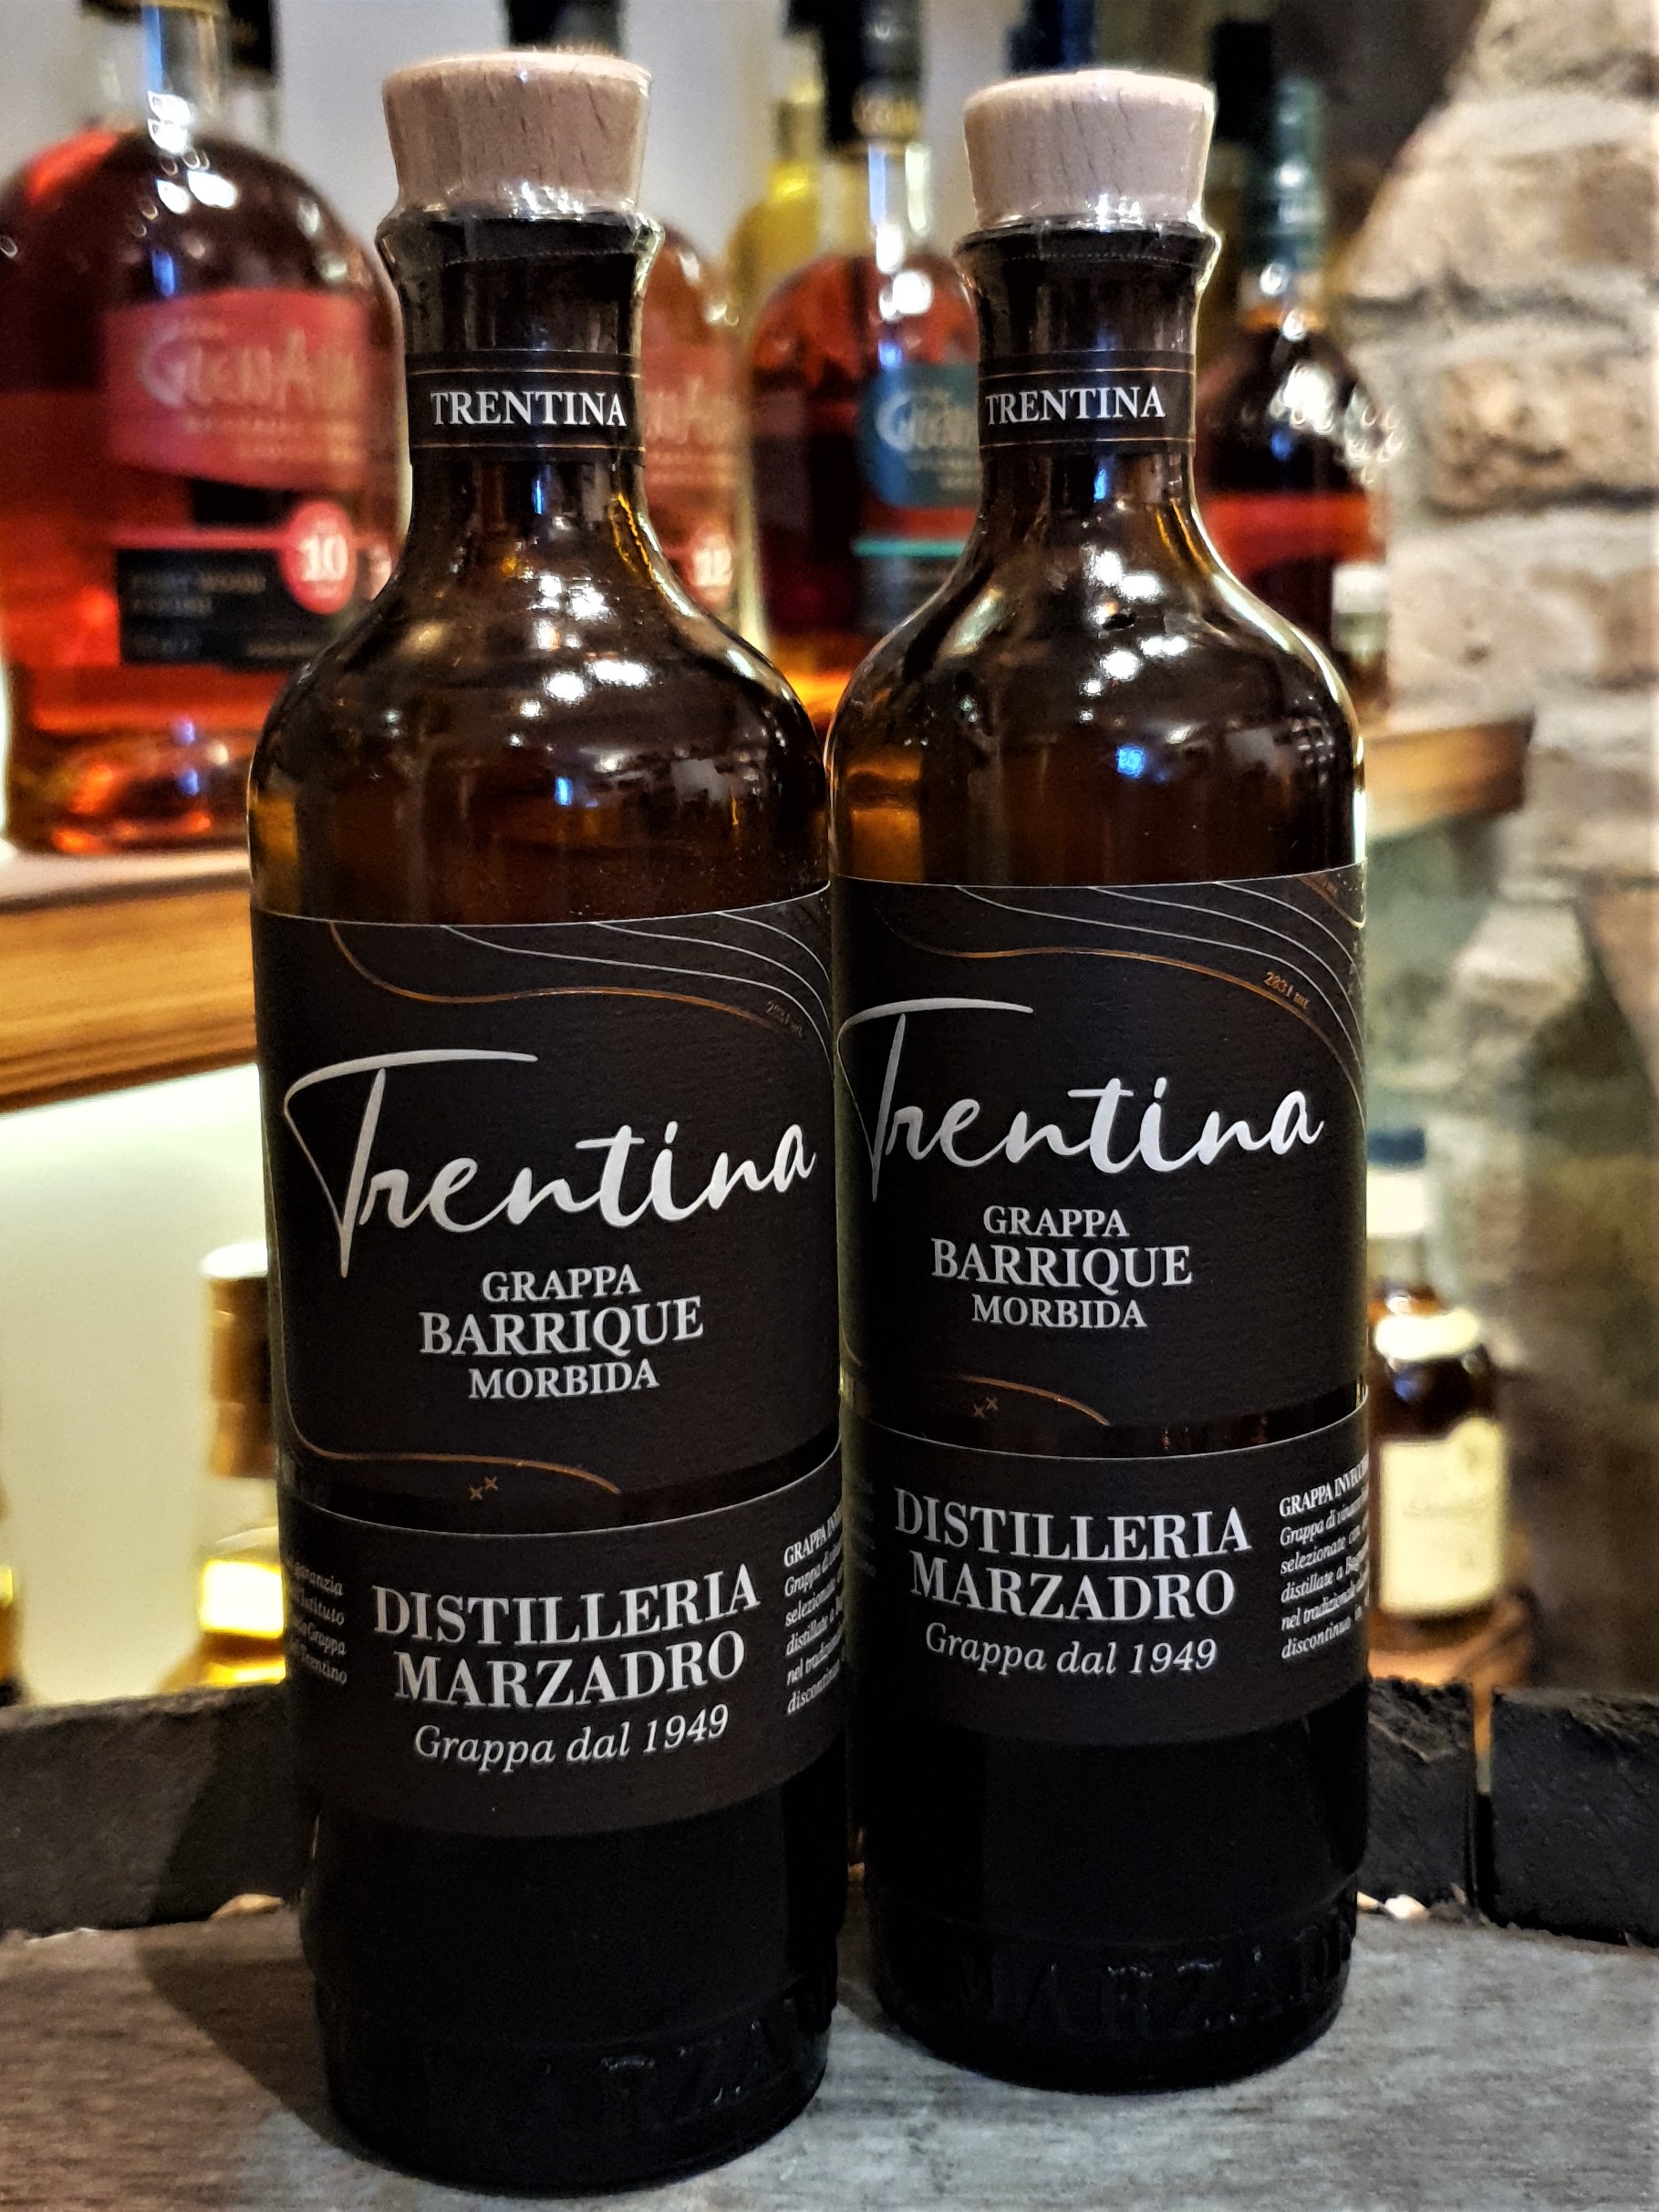 Grappa La Trentina Morbida – Whisky und – Spirituosenhandel – Rum 0,2l rechtsrheinisch – Postert Köln Whisky, 41% –